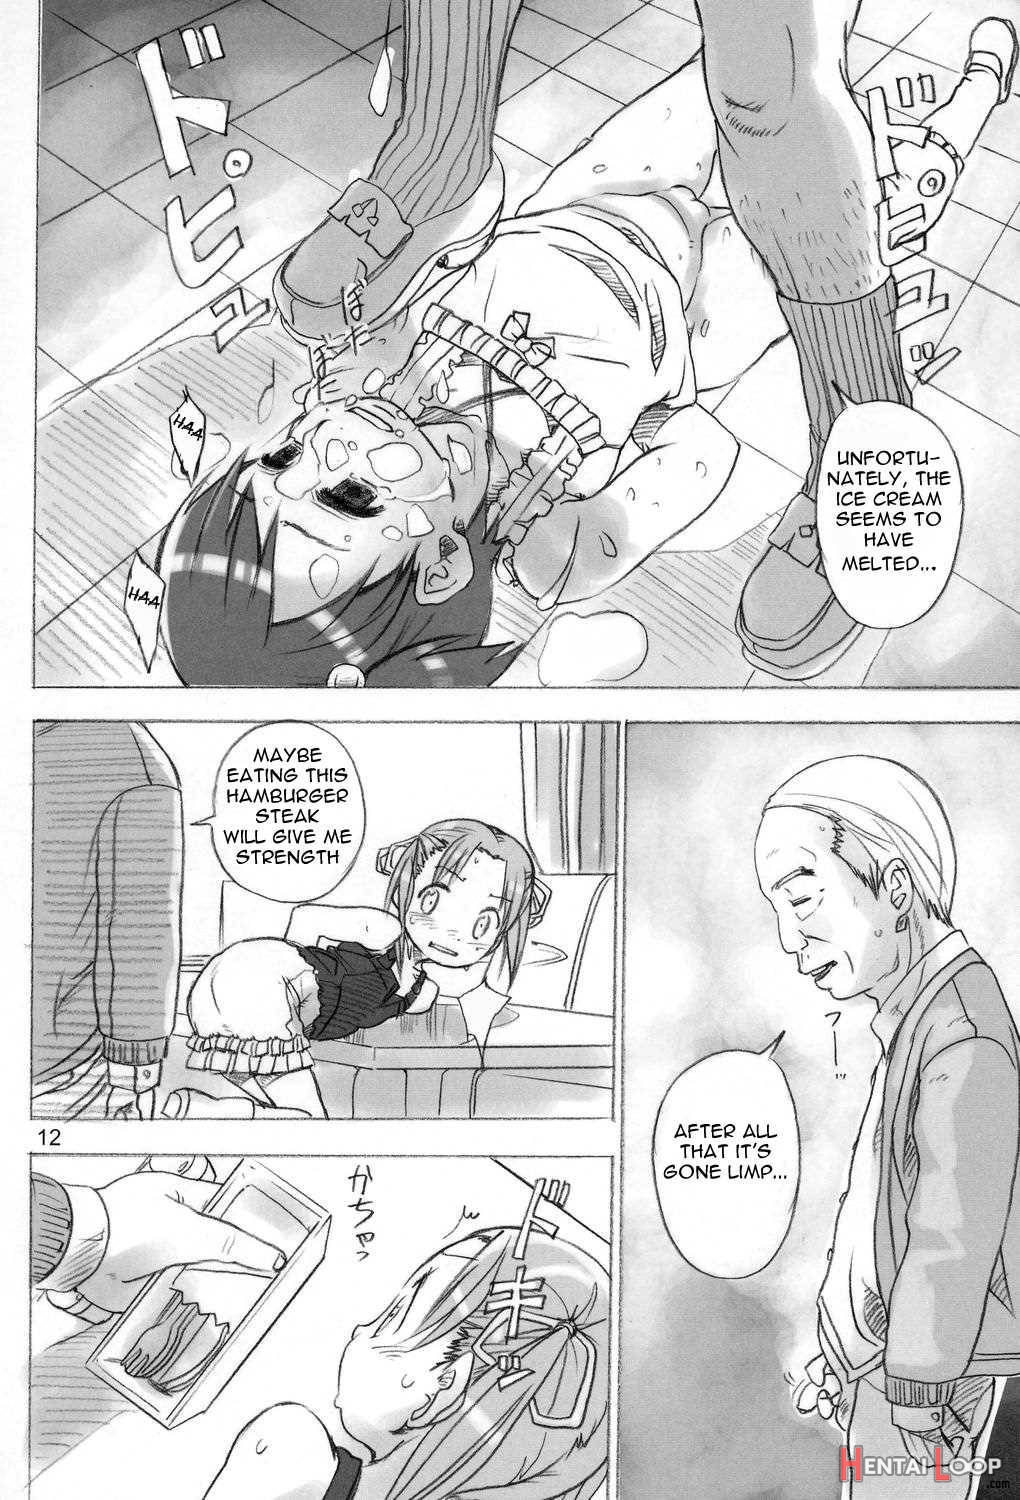 MochiMochiMashimaro page 10